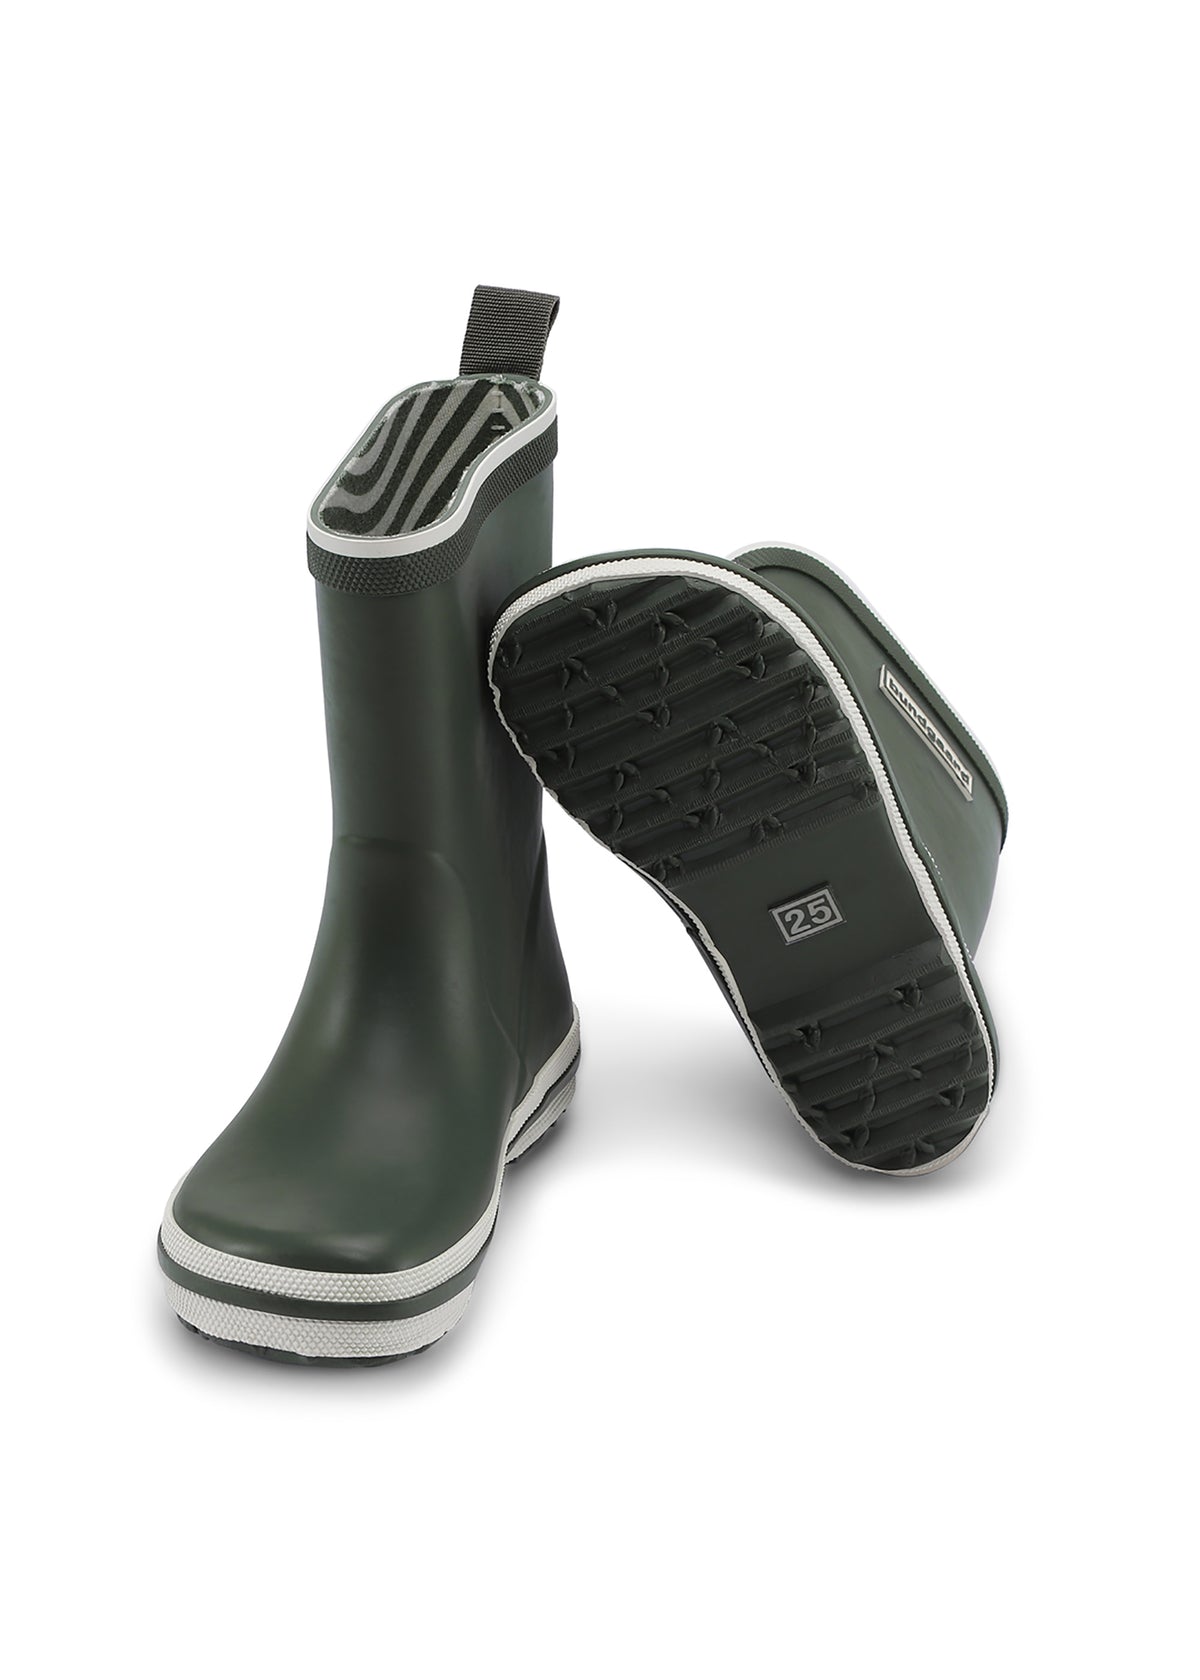 Rubber boots - Army, dark green, Bundgaard Zero Heel